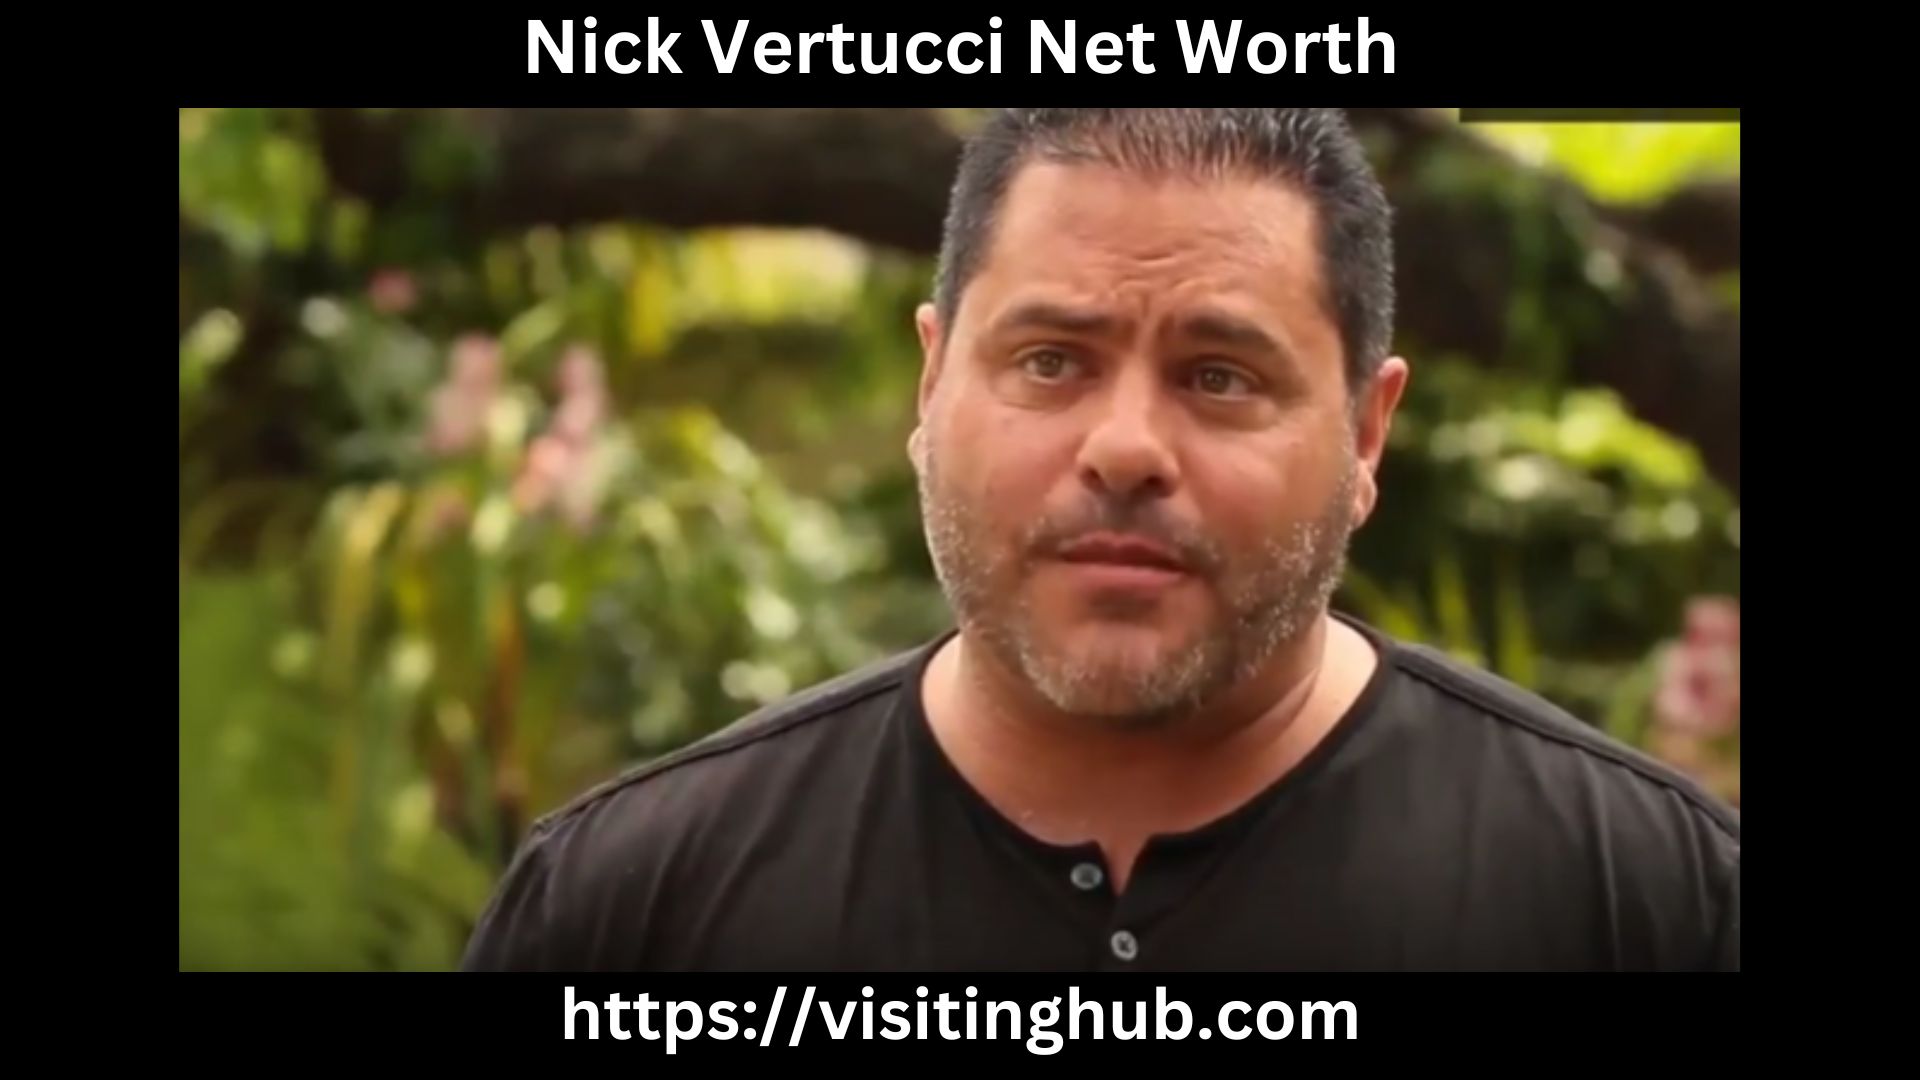 Nick Vertucci Net Worth